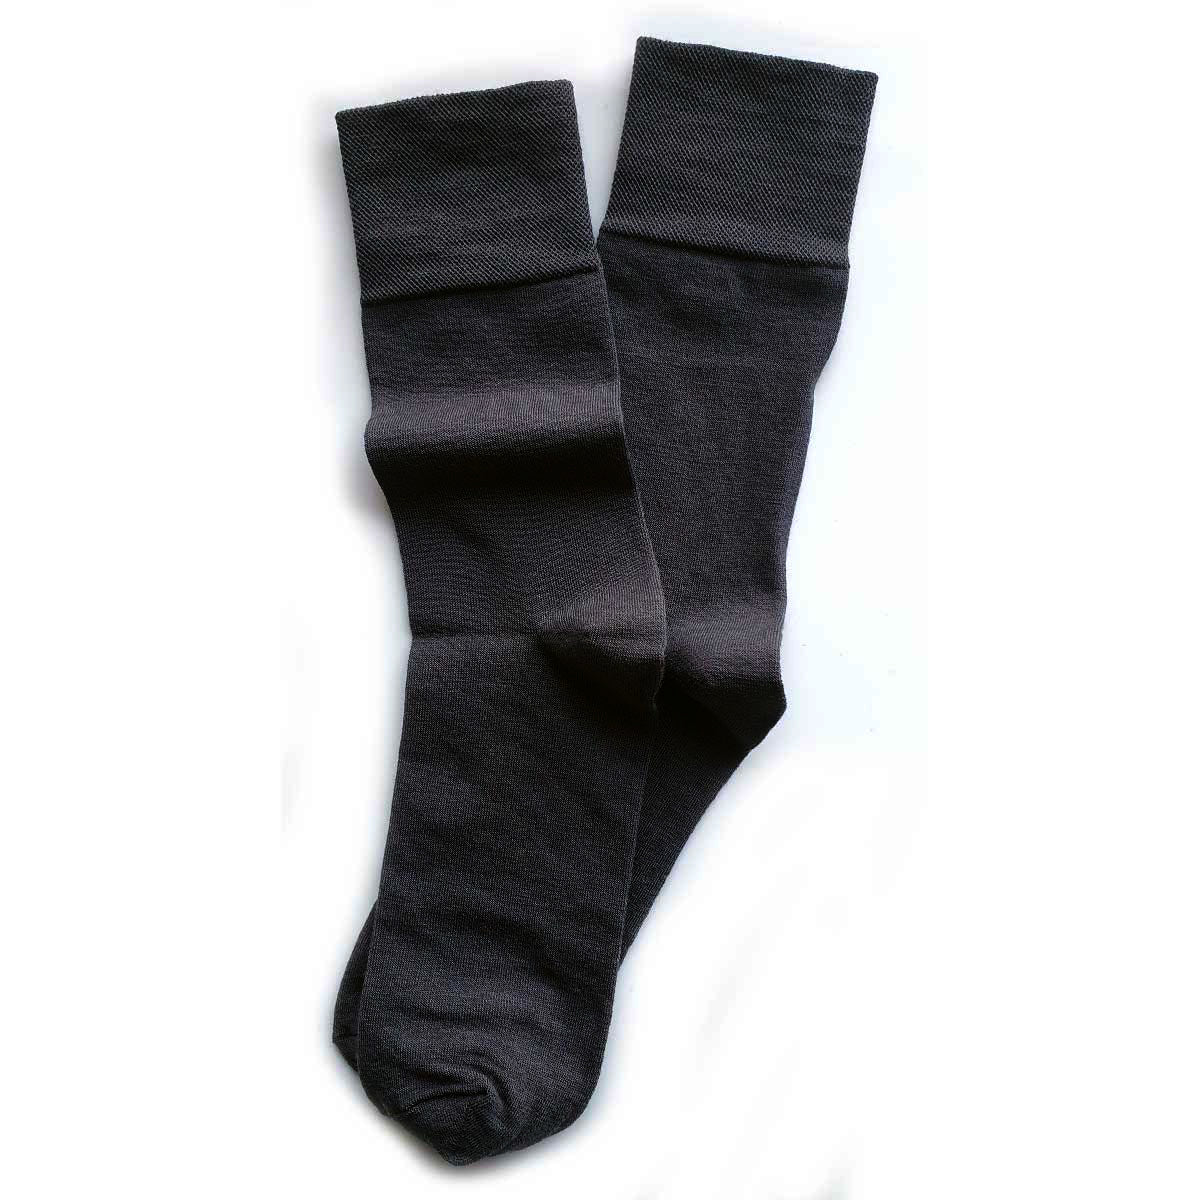 Pack of men's wool socks • 90% merino wool dress socks